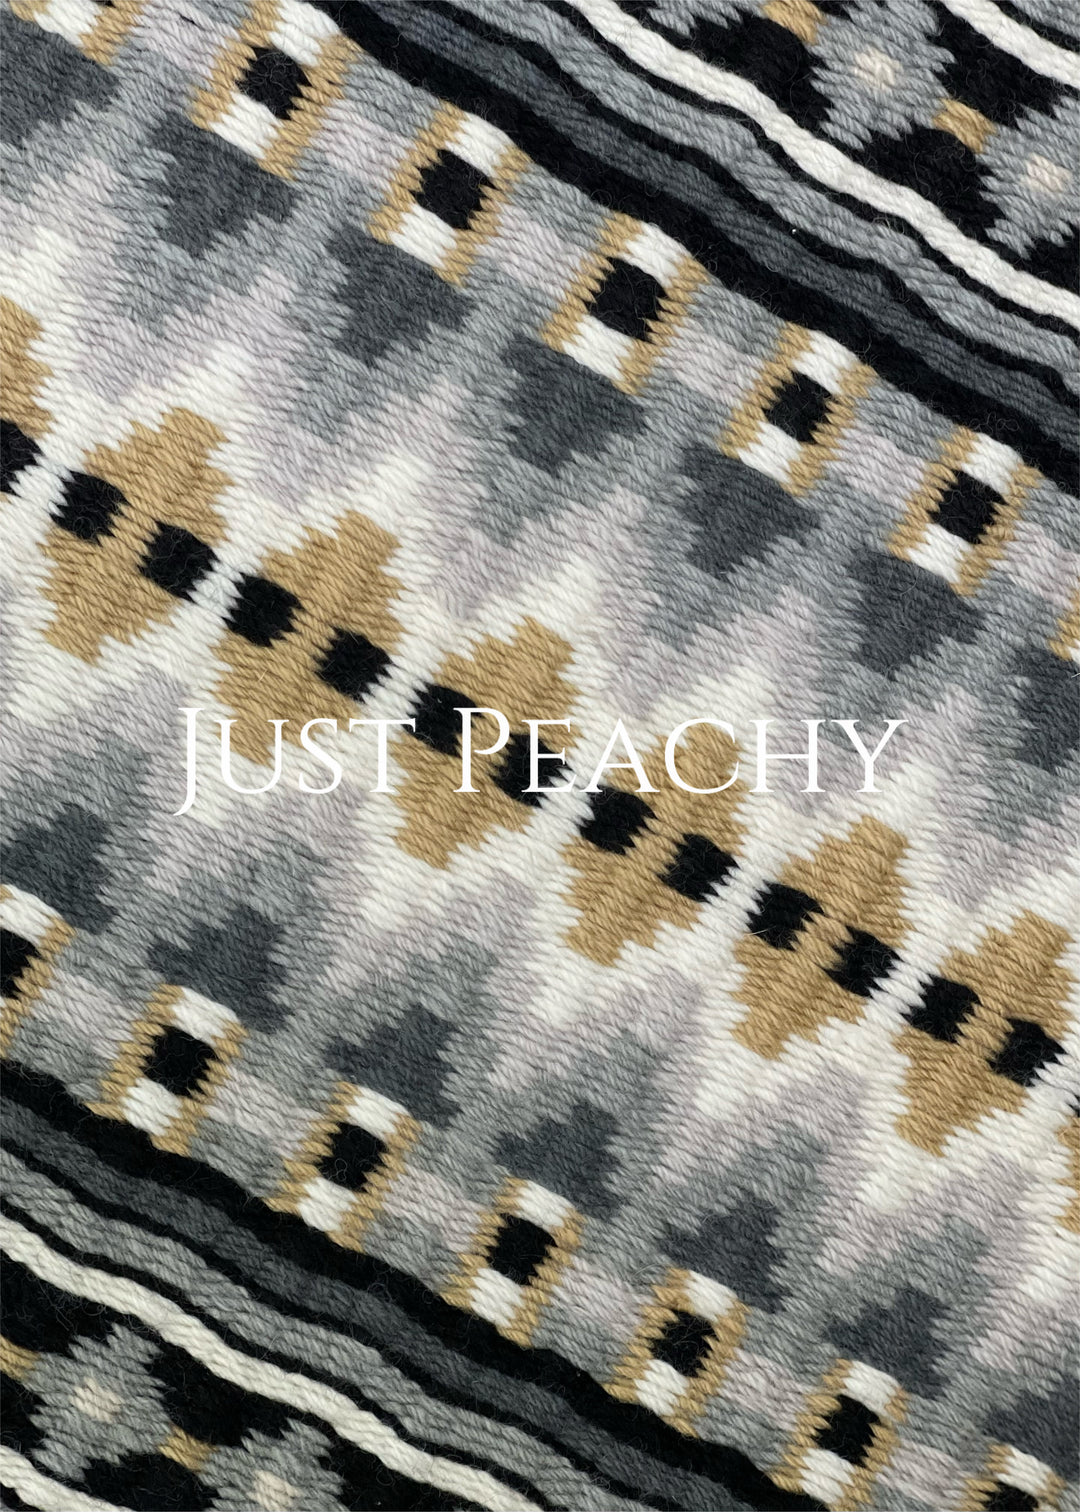 Just Peachy Premier Western Show Blanket ~ The 2.0 Kaycee #965